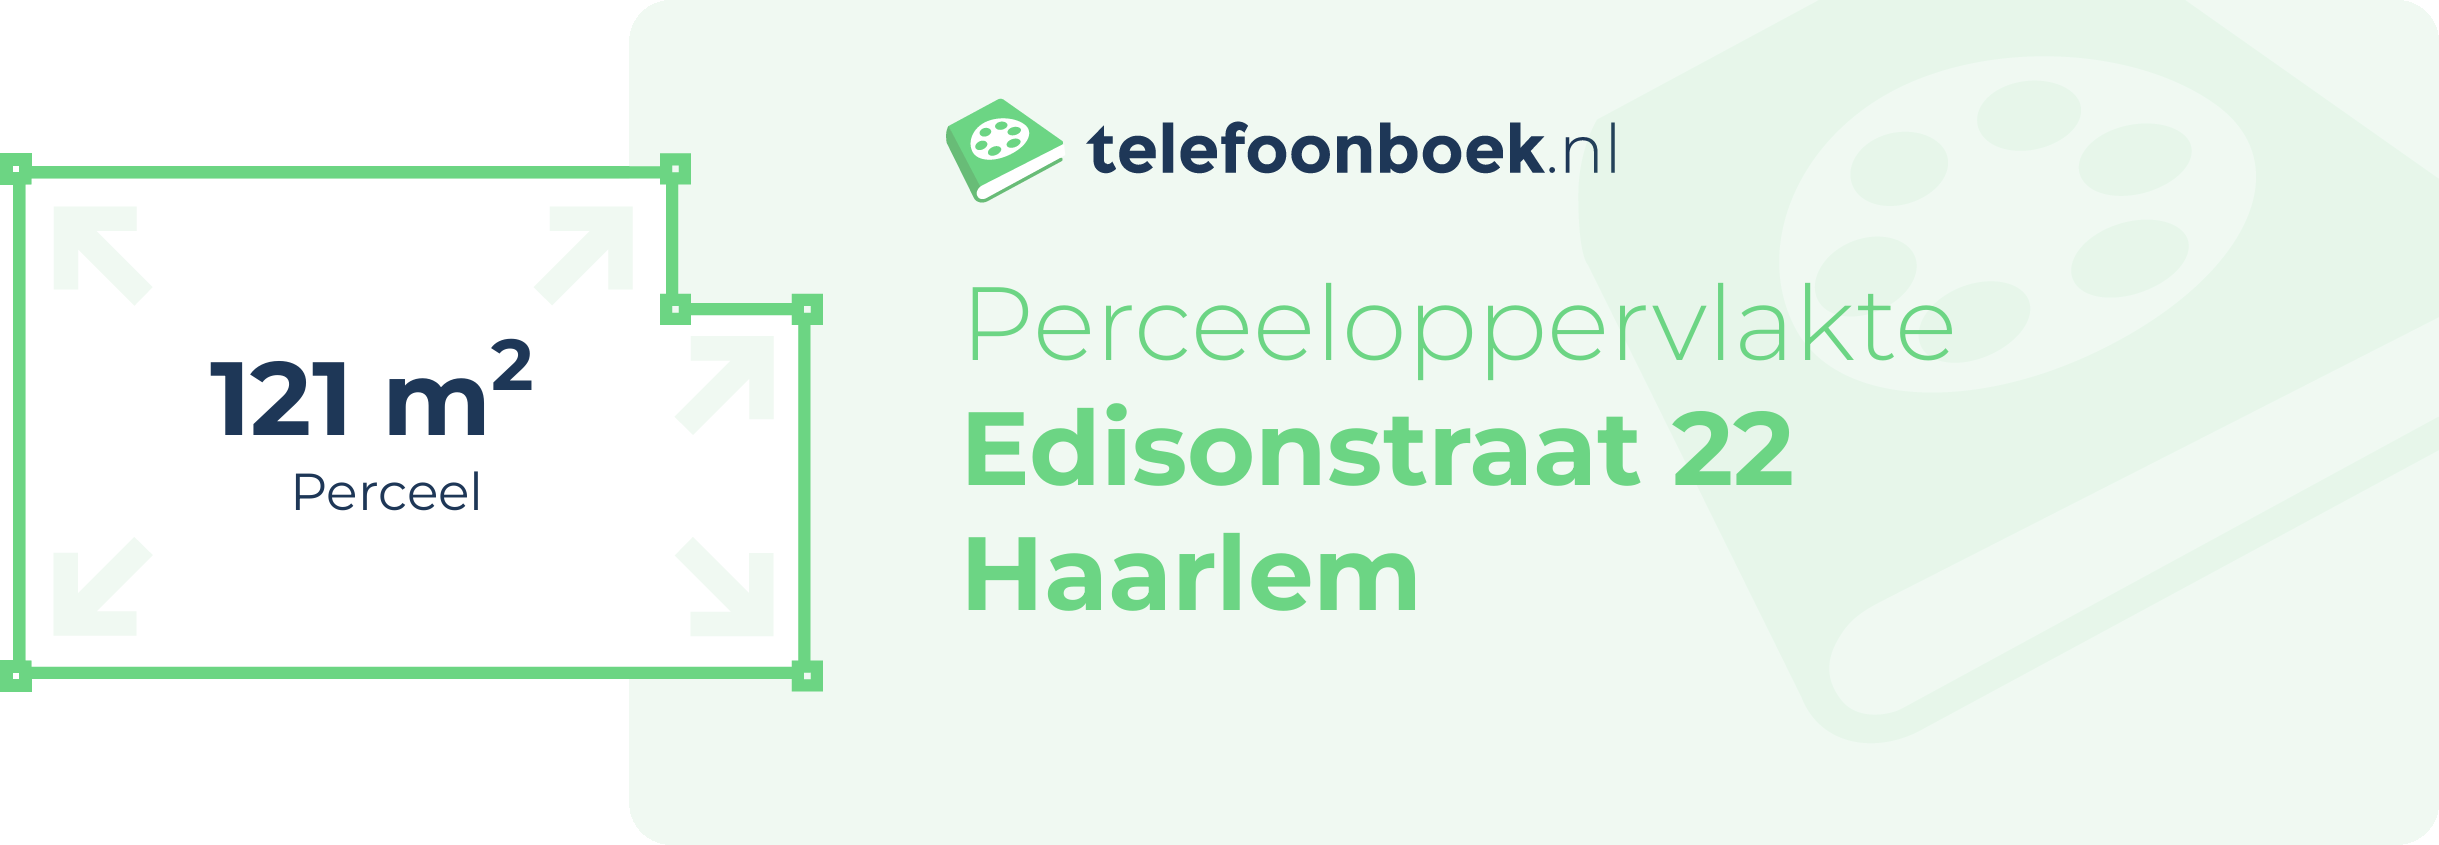 Perceeloppervlakte Edisonstraat 22 Haarlem